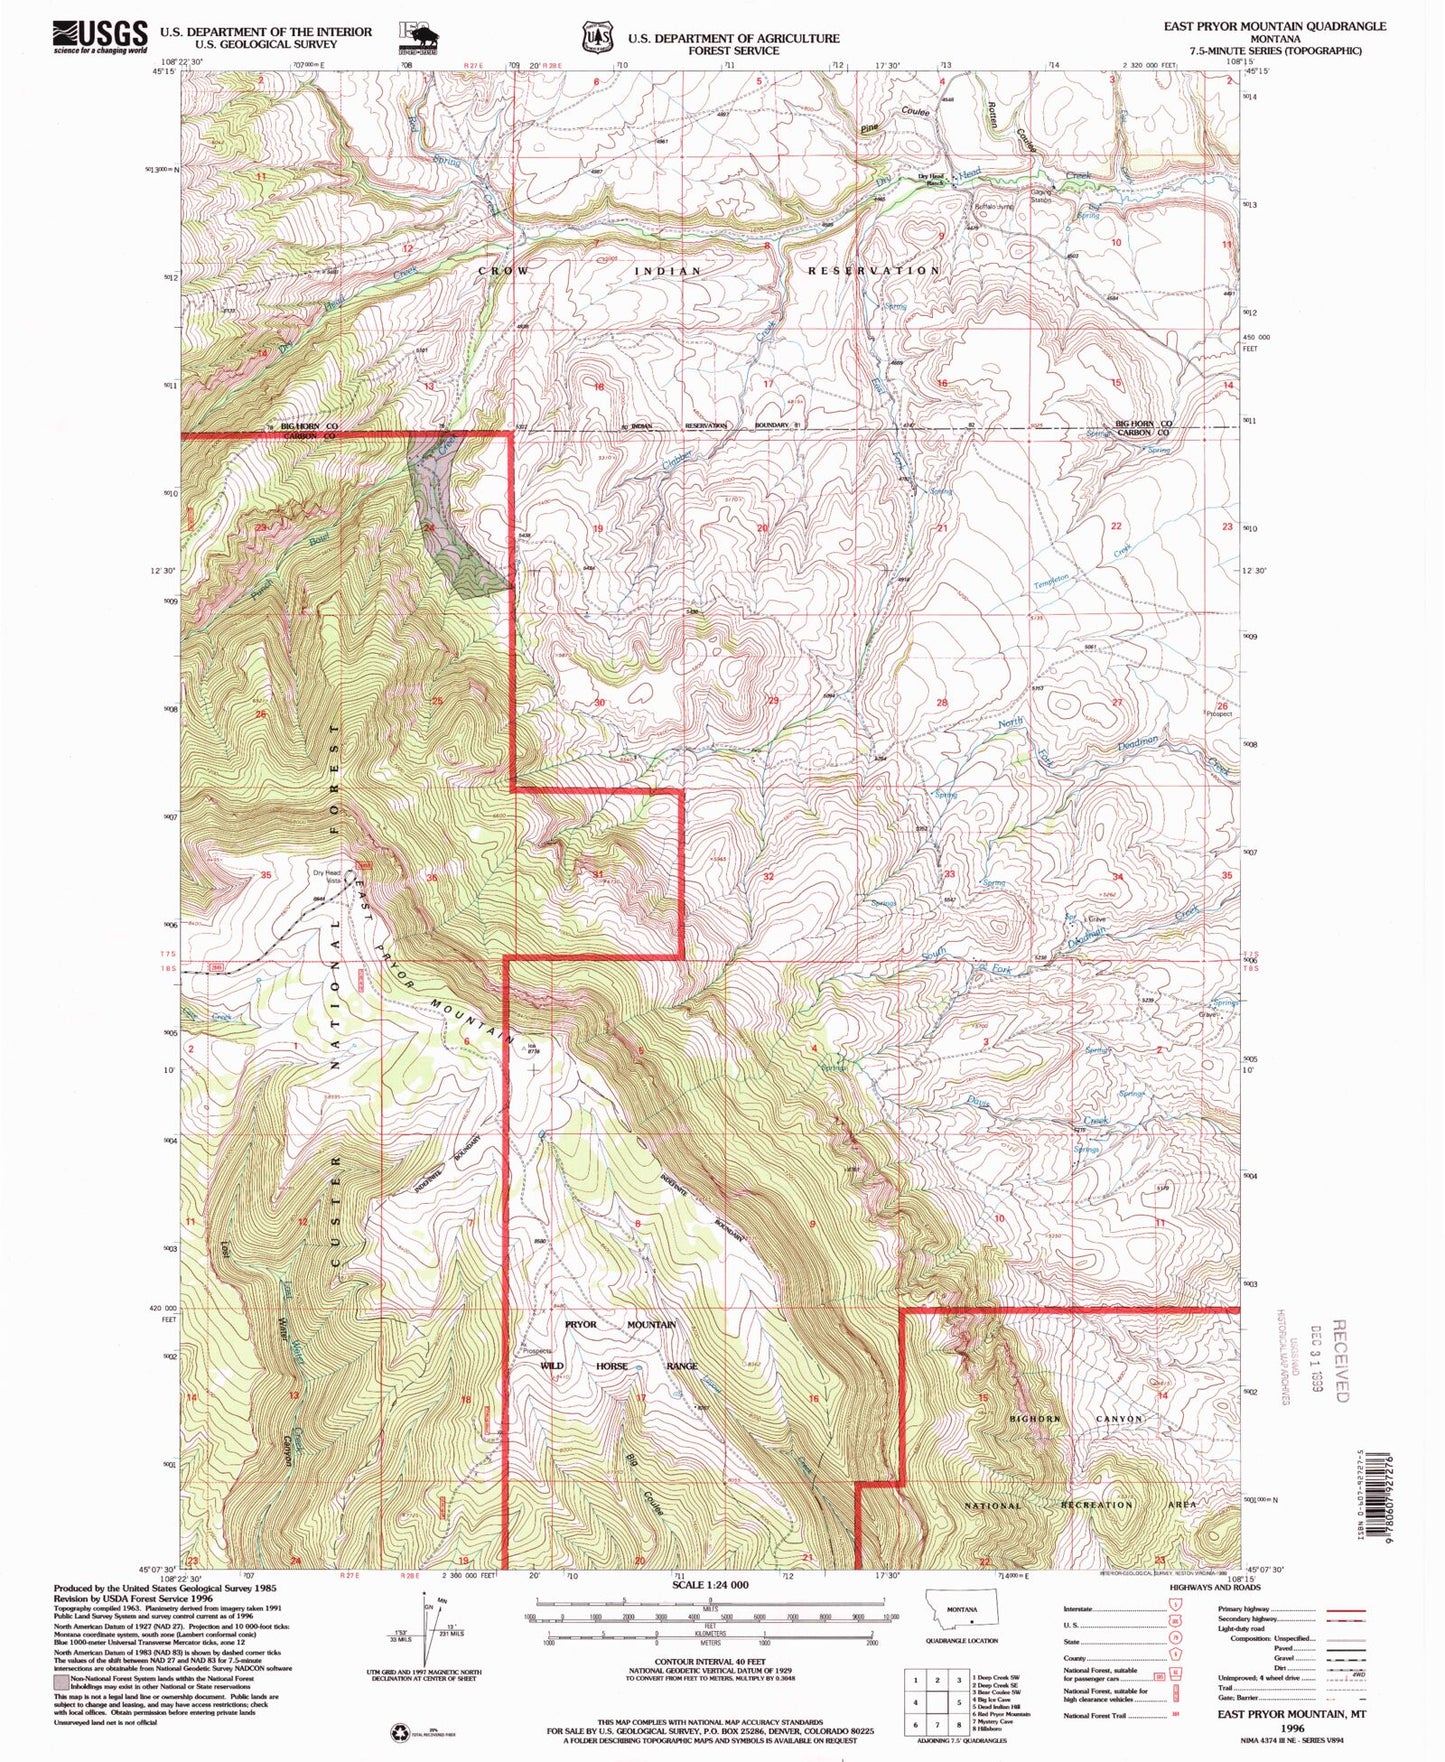 Classic USGS East Pryor Mountain Montana 7.5'x7.5' Topo Map Image